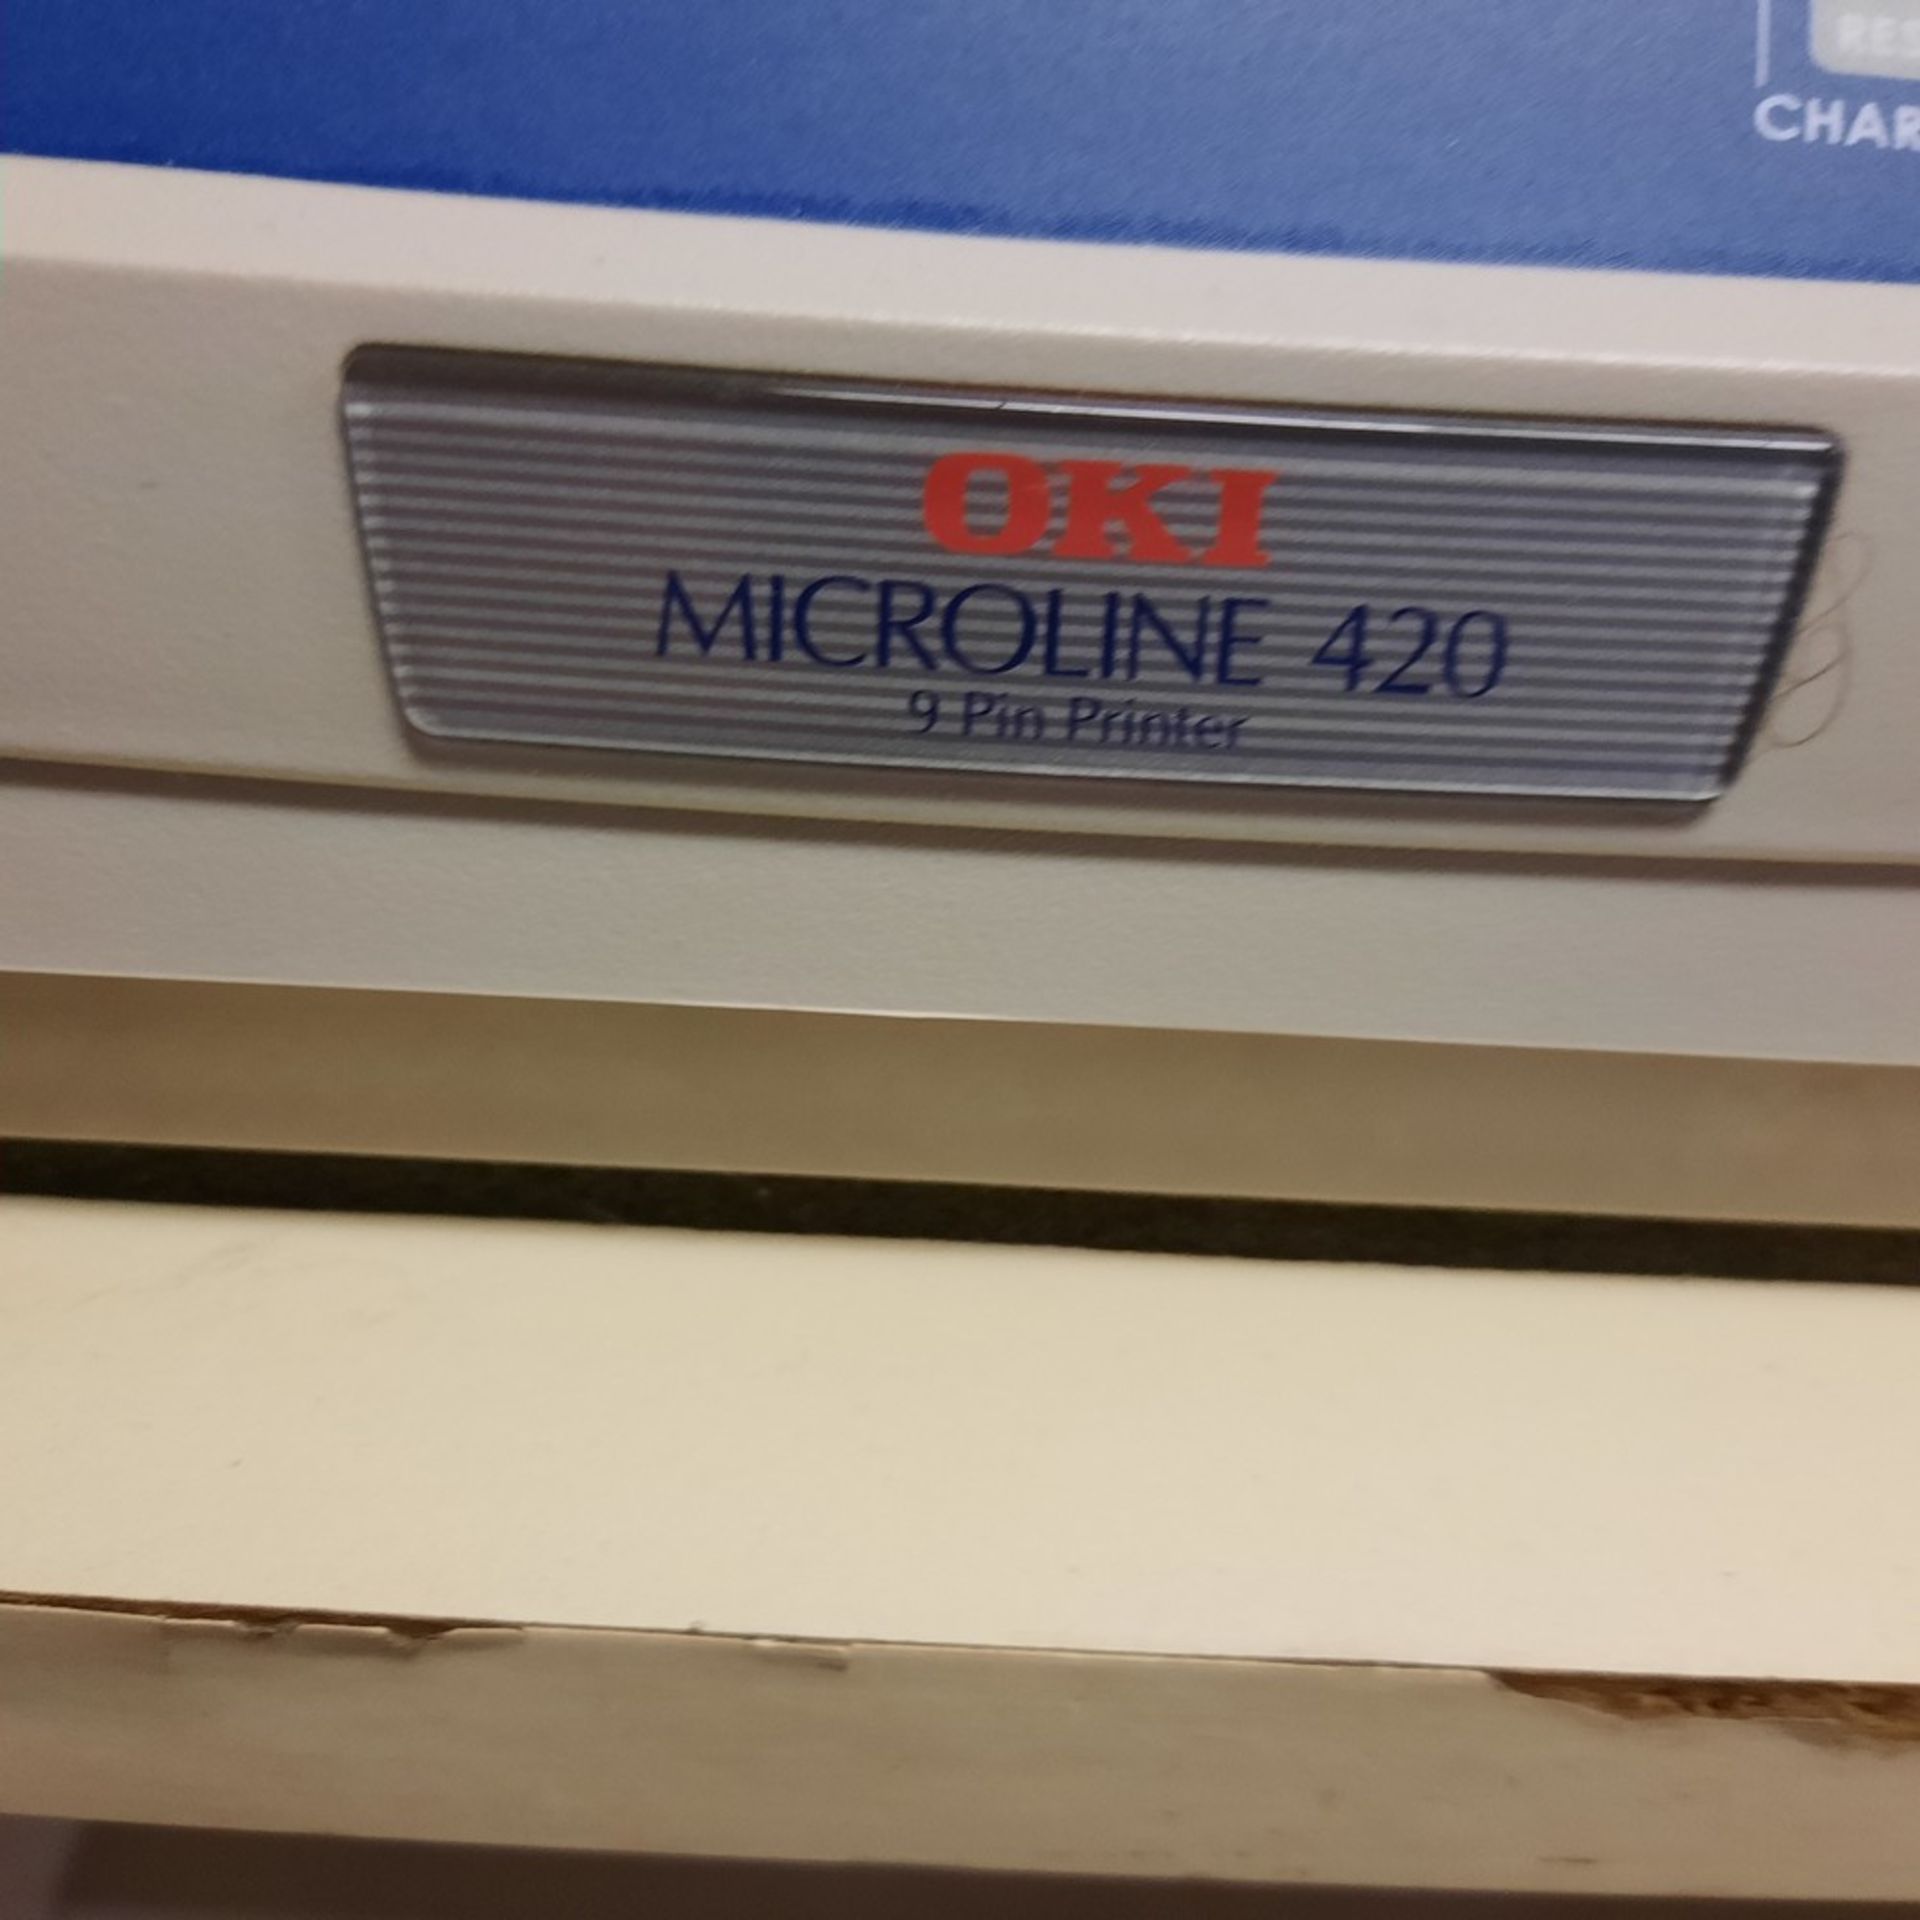 OKI Microline 420 9-pin Printer - Image 3 of 3